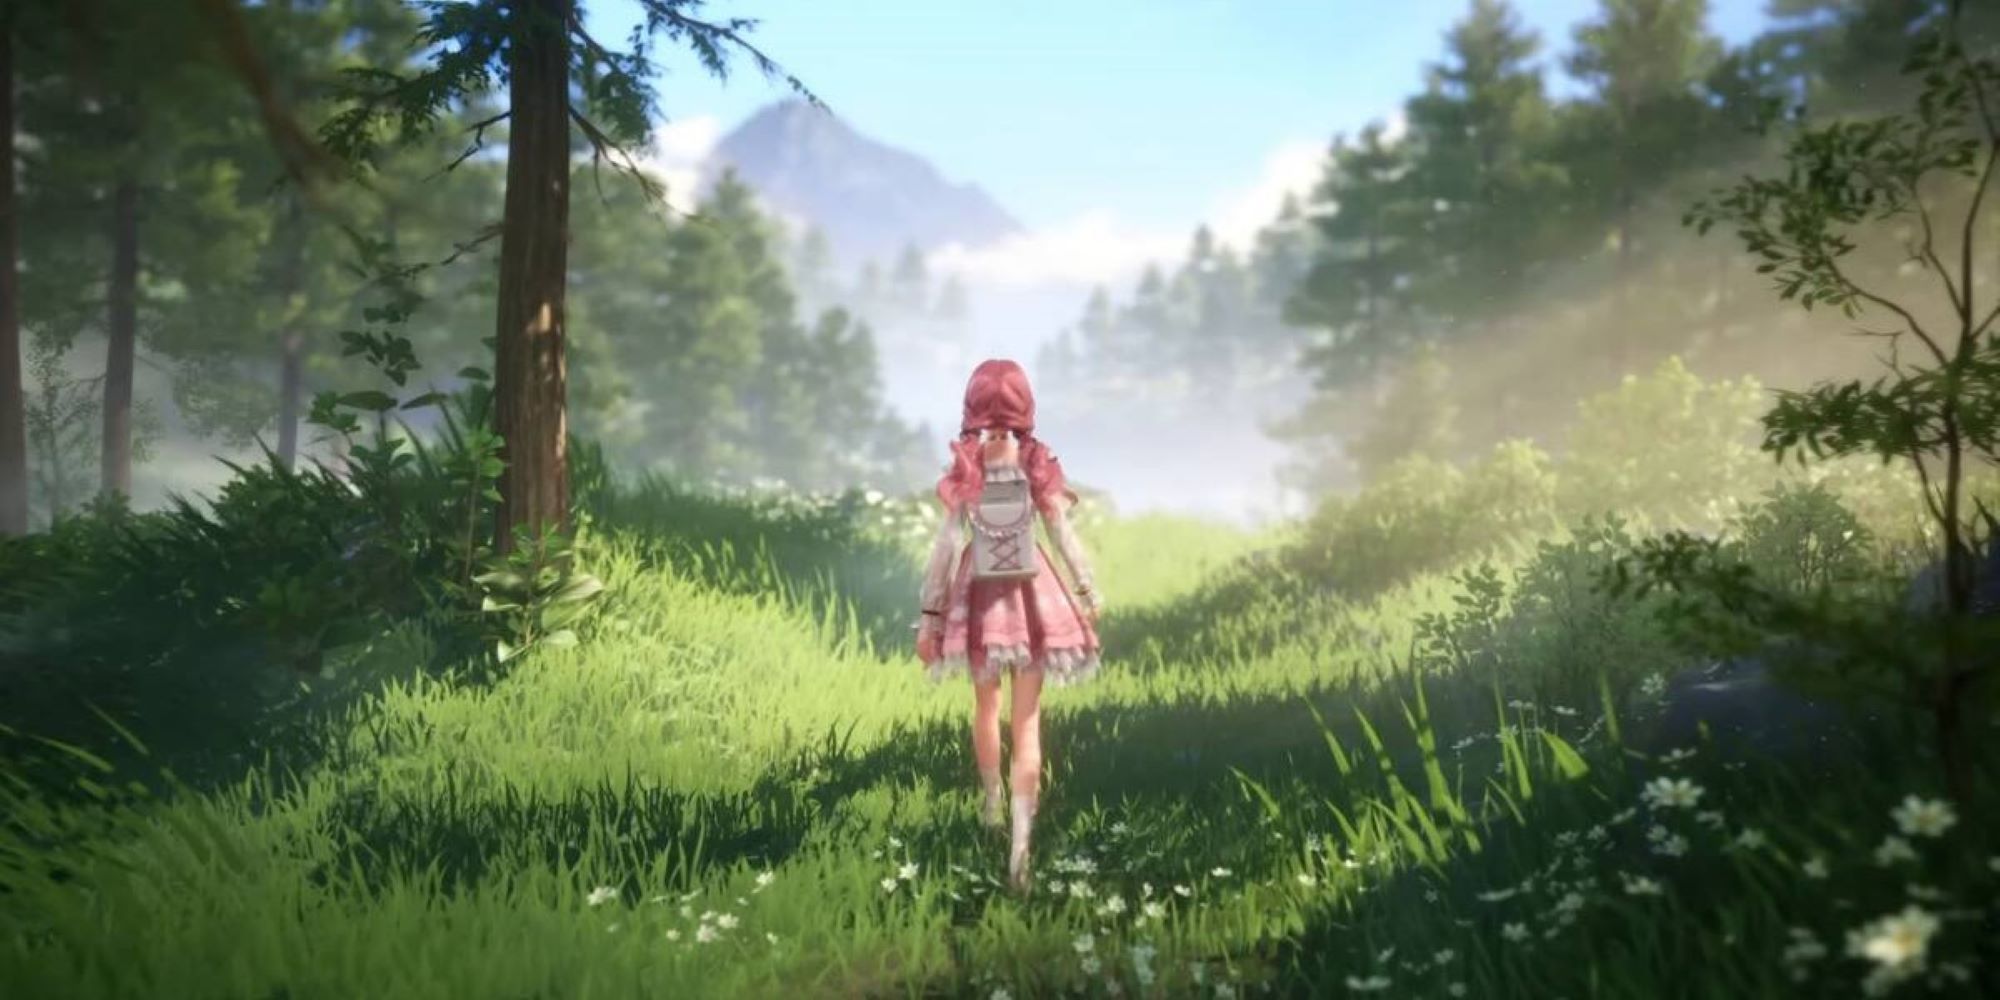 Infinity Nikki, player character walking through the fields